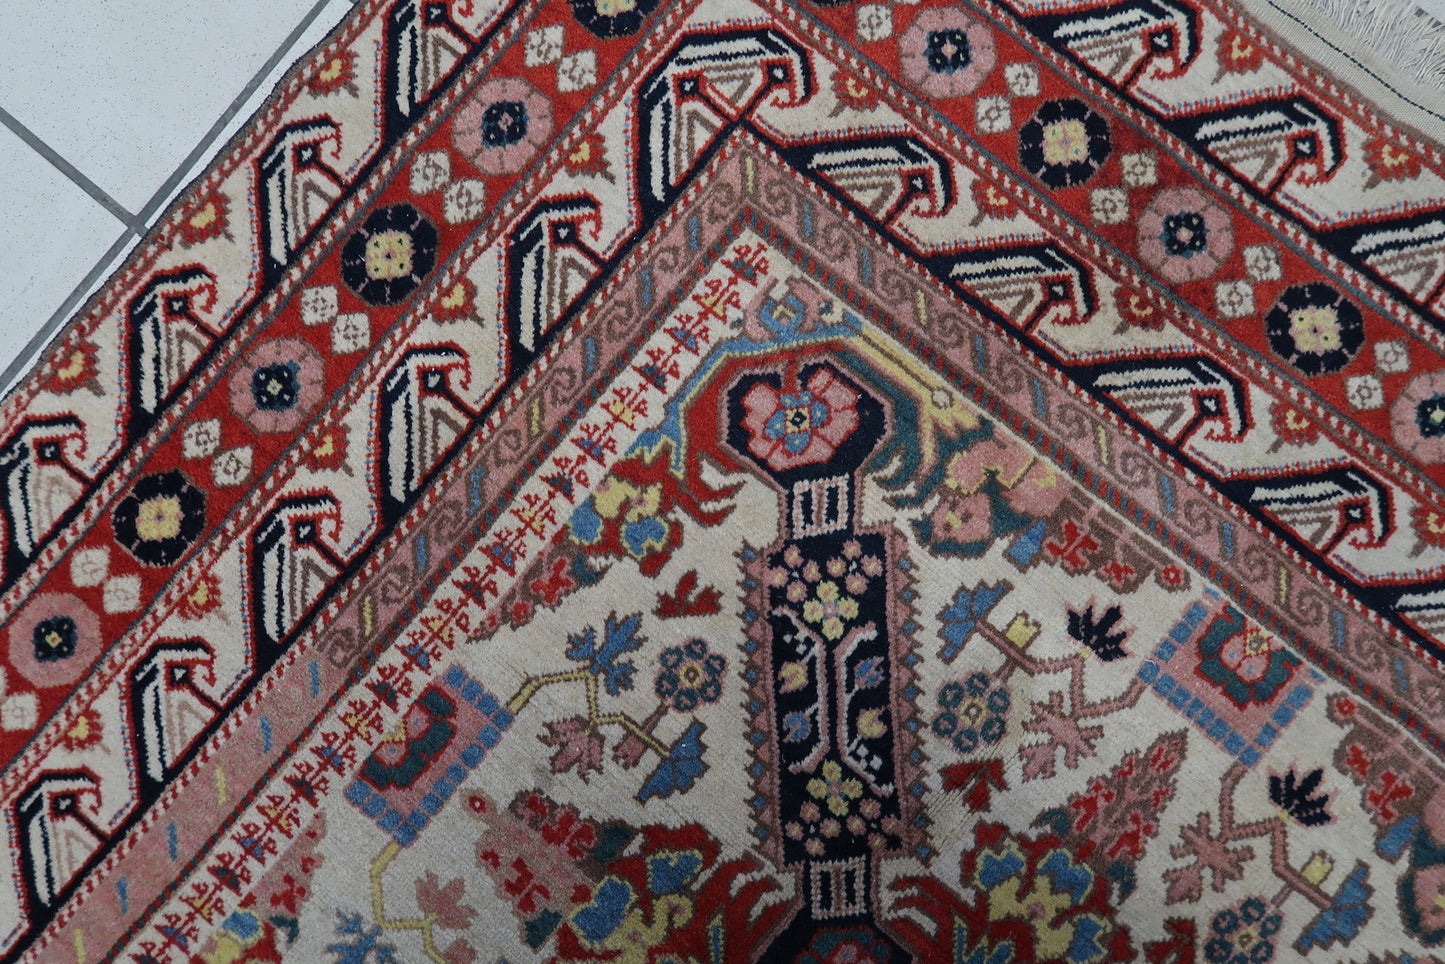 Close-up of the symmetrical navy blue crosses on the handmade vintage Caucasian Zeyhur rug